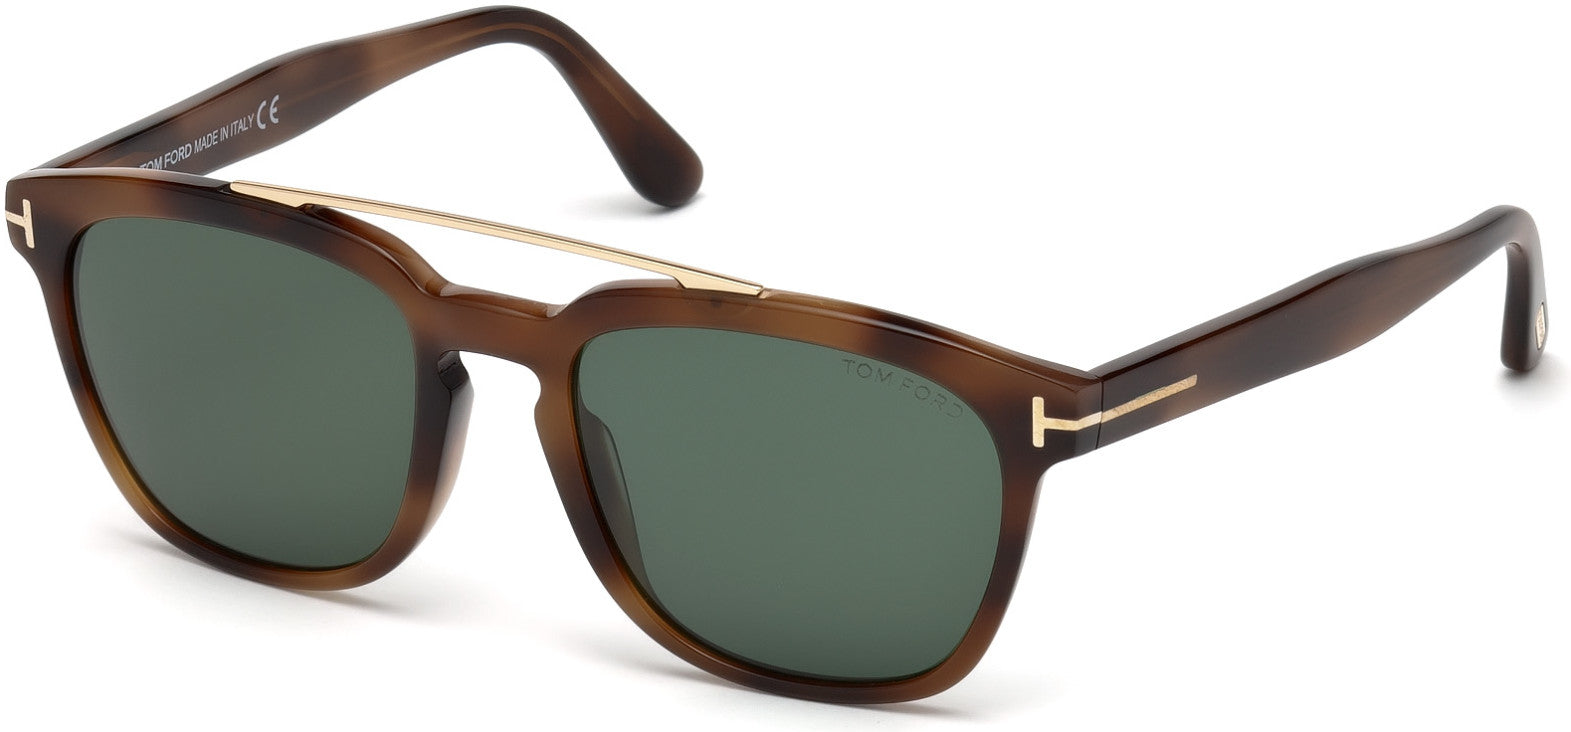 Tom Ford FT0516 Holt Geometric Sunglasses 53N-53N - Shiny Blonde Havana, Rose Gold Brow Bar/ Green Lenses